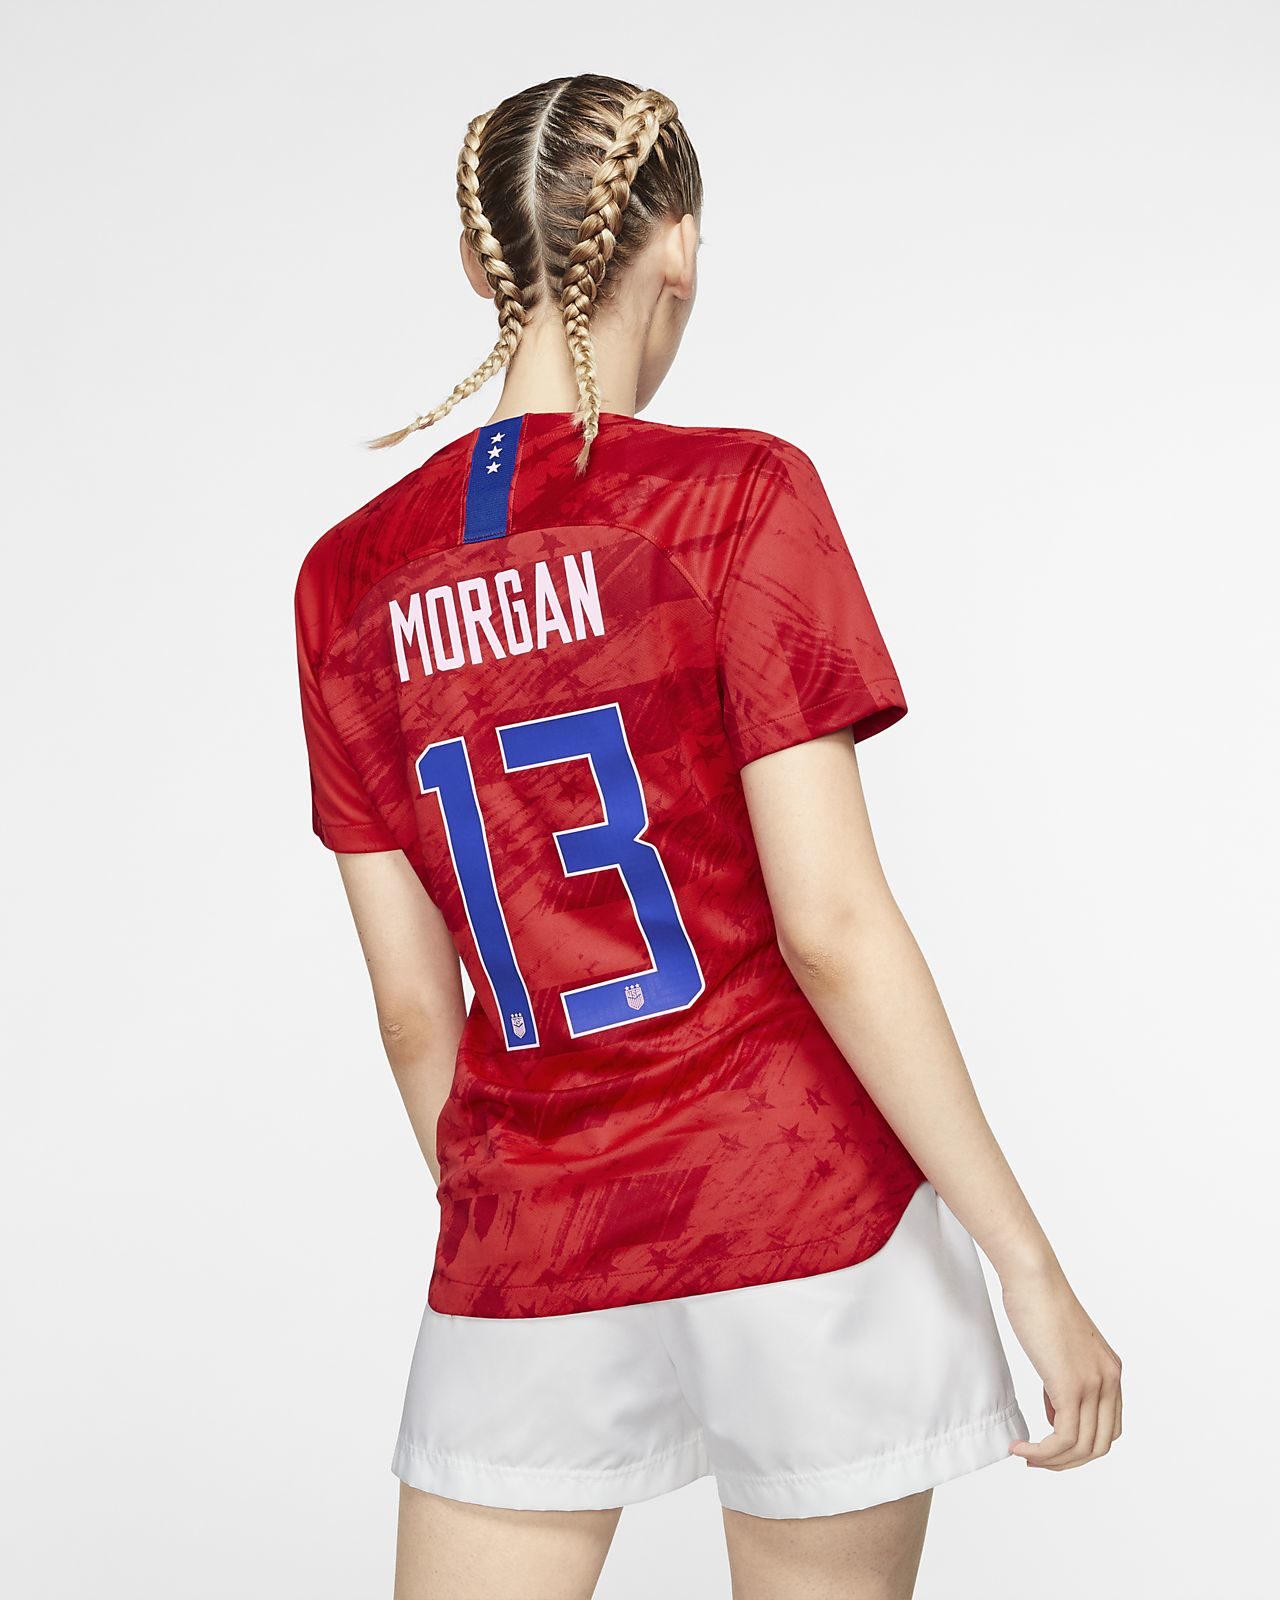 us women's soccer morgan jersey